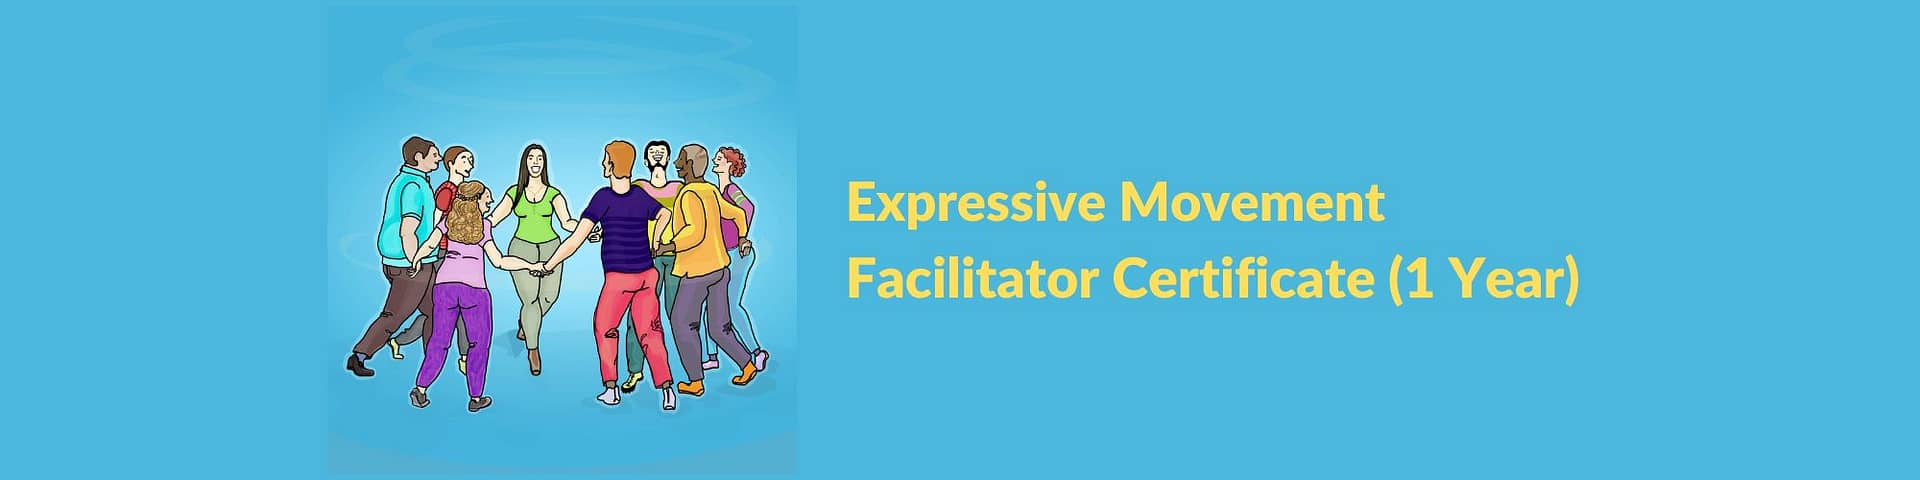 Expressive Movement Facilitator Certificate (1 Year)